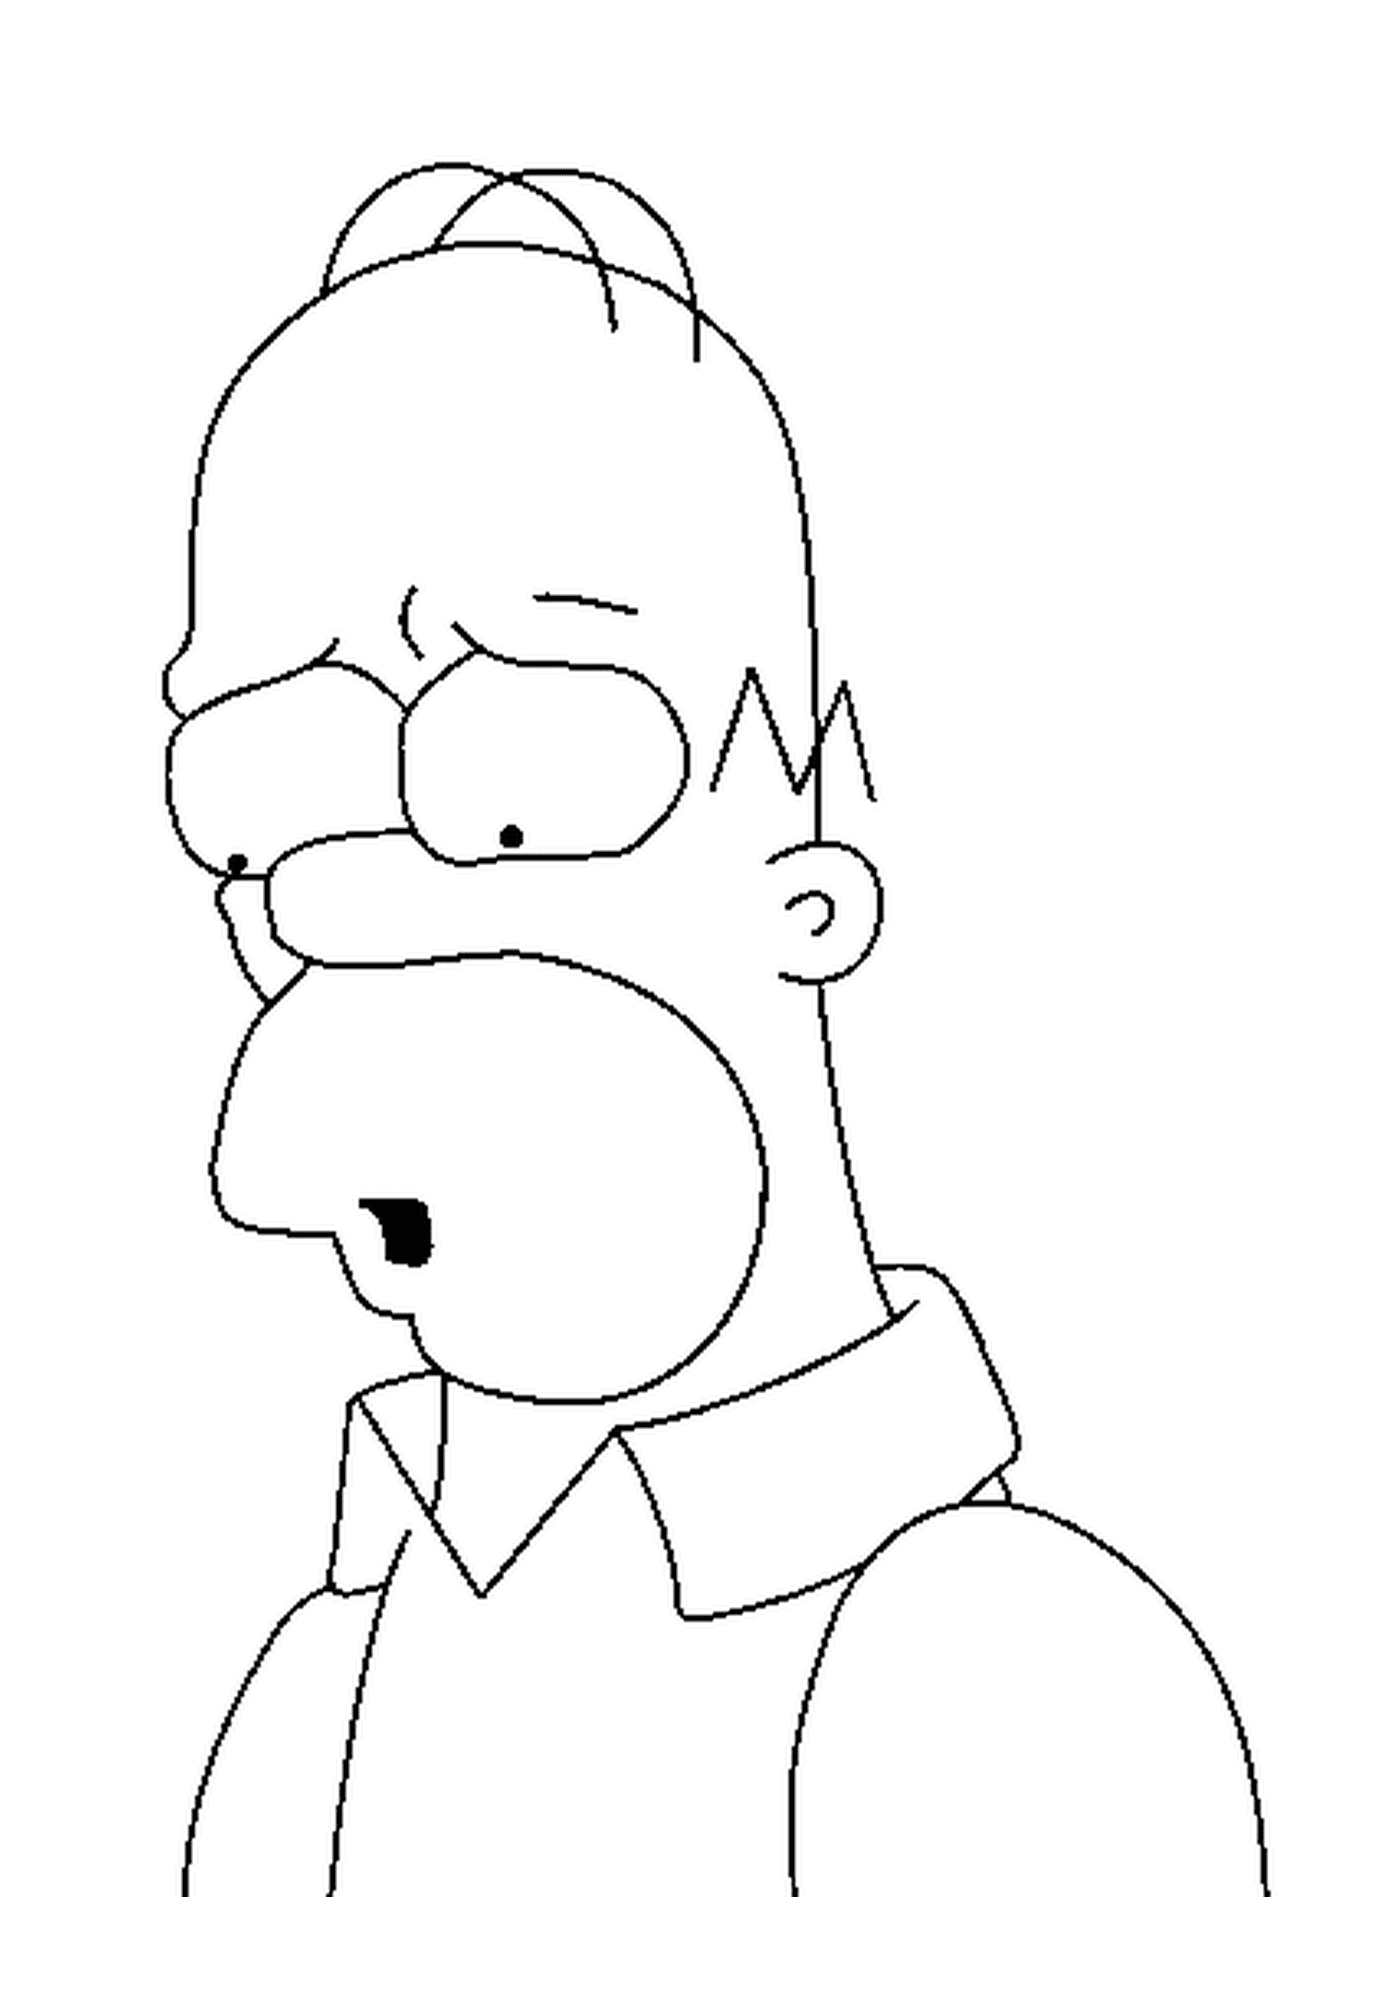   Homer Simpson, visage triste 